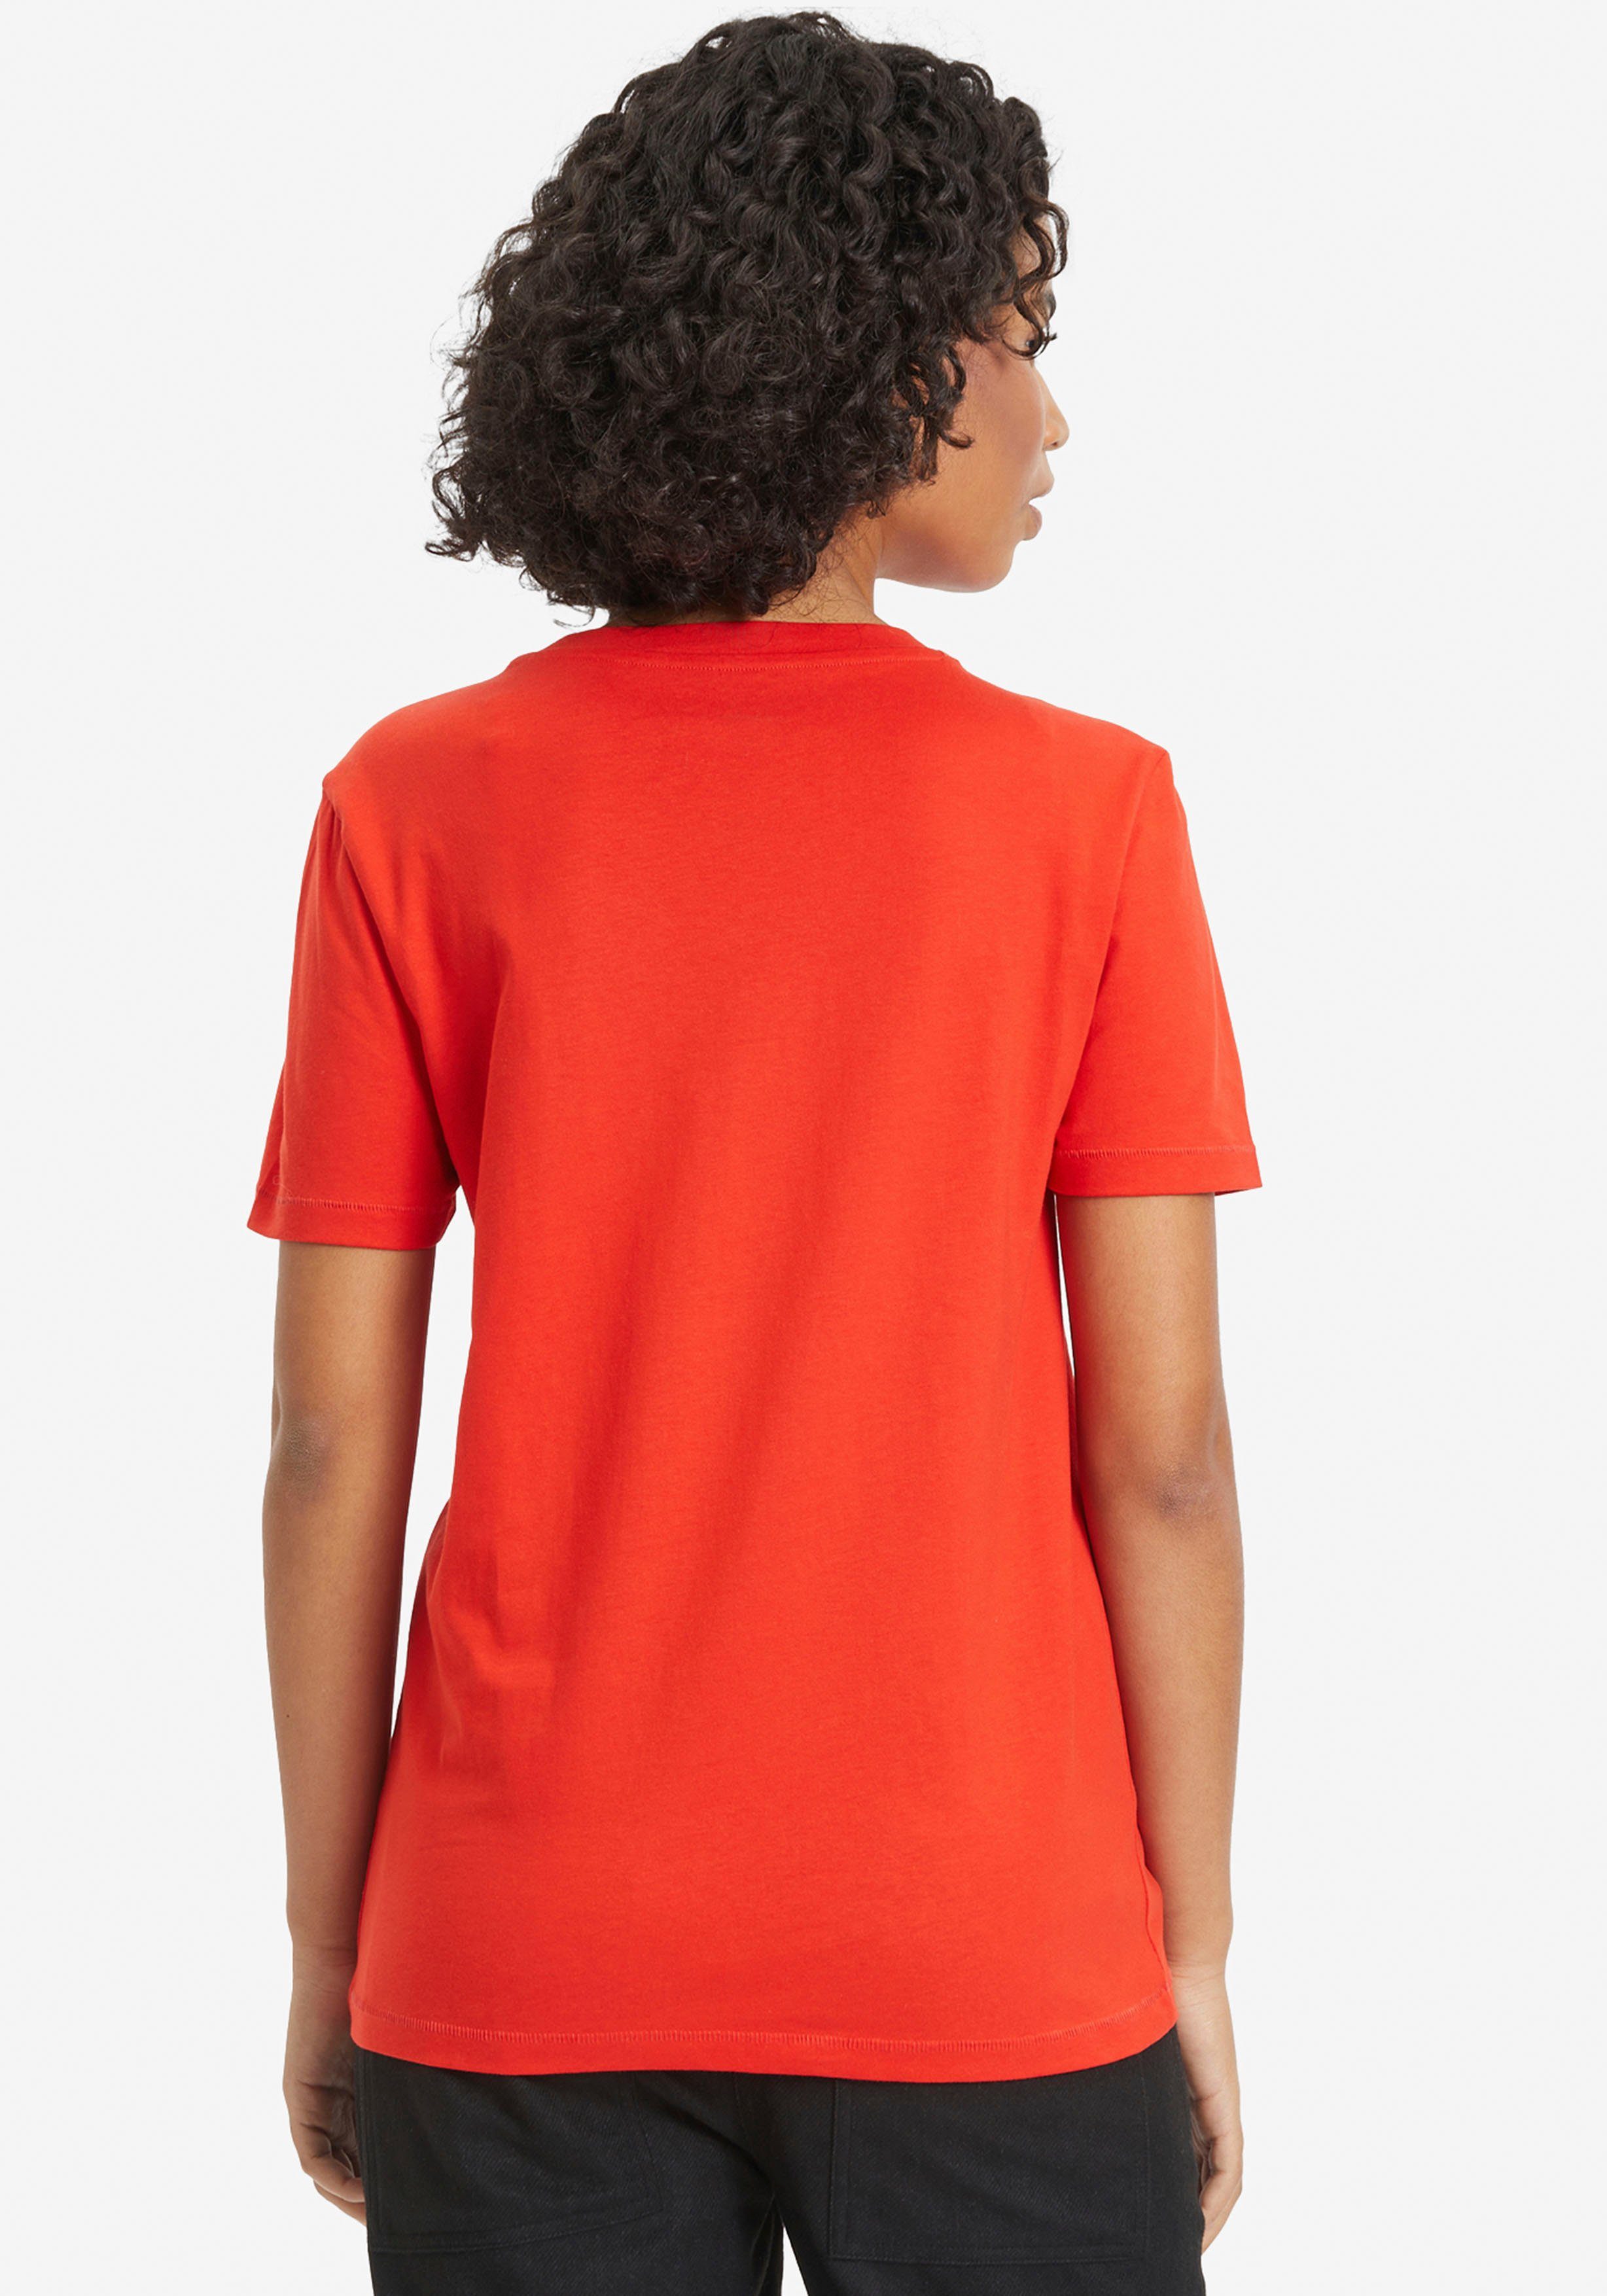 NEUE Rundhalsausschnitt KOLLEKTION T-Shirt mit Tamaris - red fiery